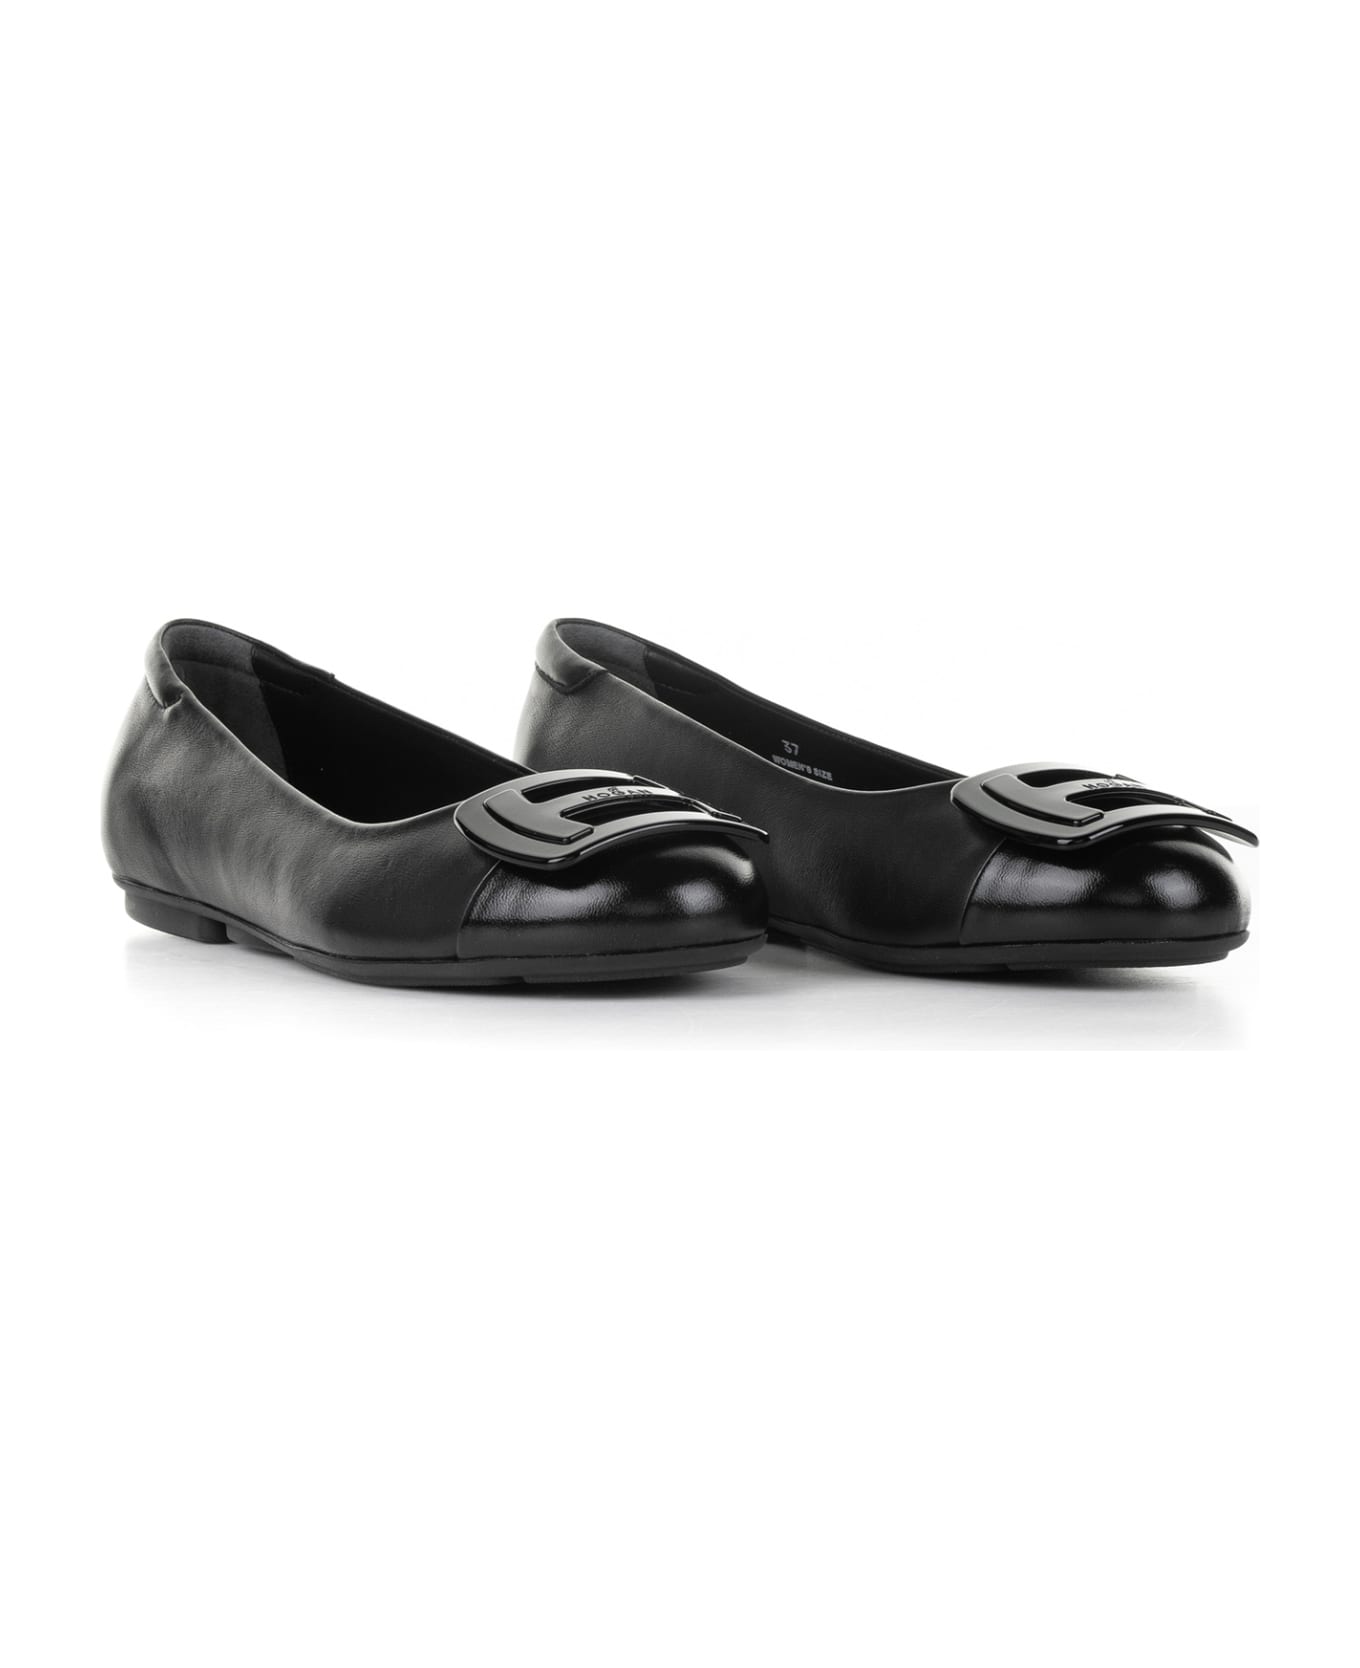 Hogan H661 Patent Leather Ballet Flats - Black フラットシューズ